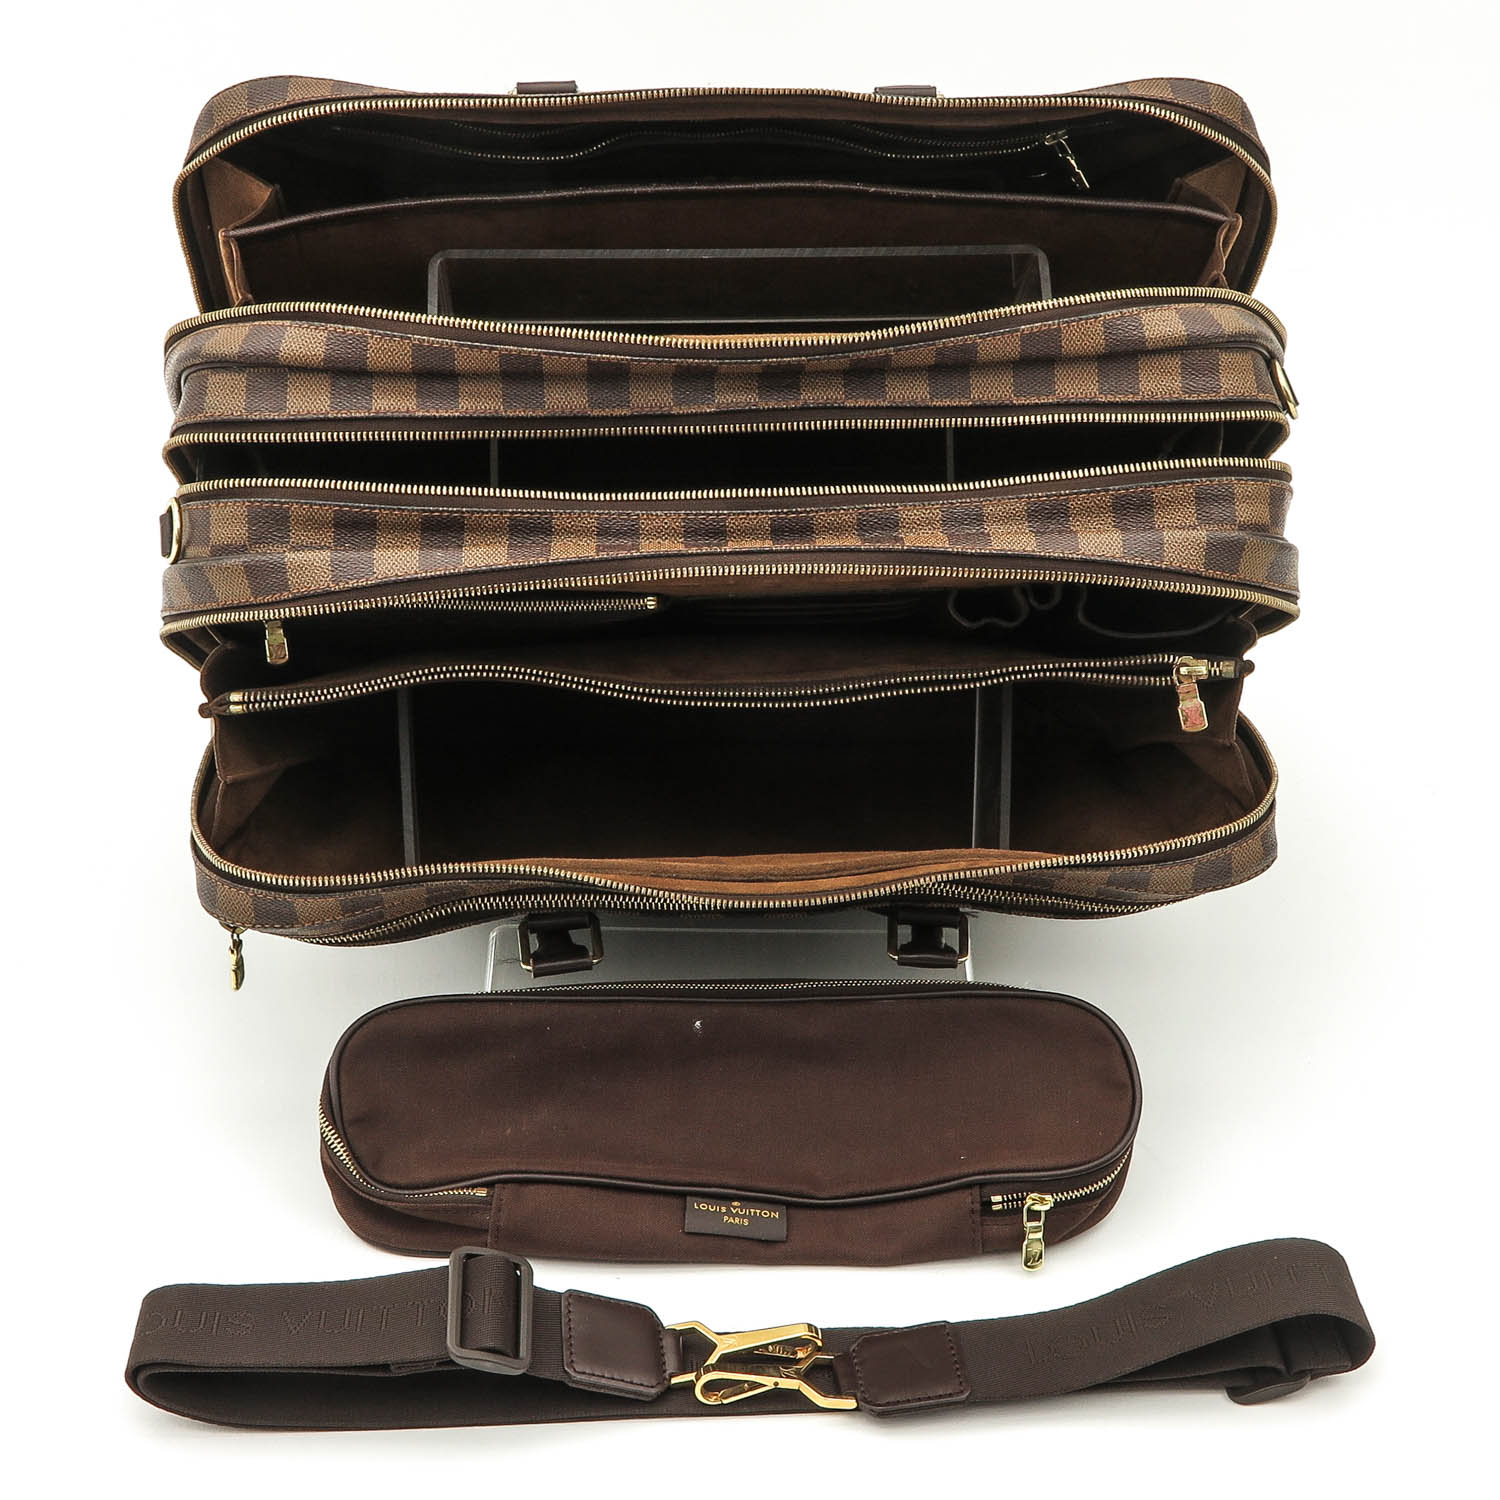 A Custom Made Louis Vuitton Travel Bag - Image 7 of 8